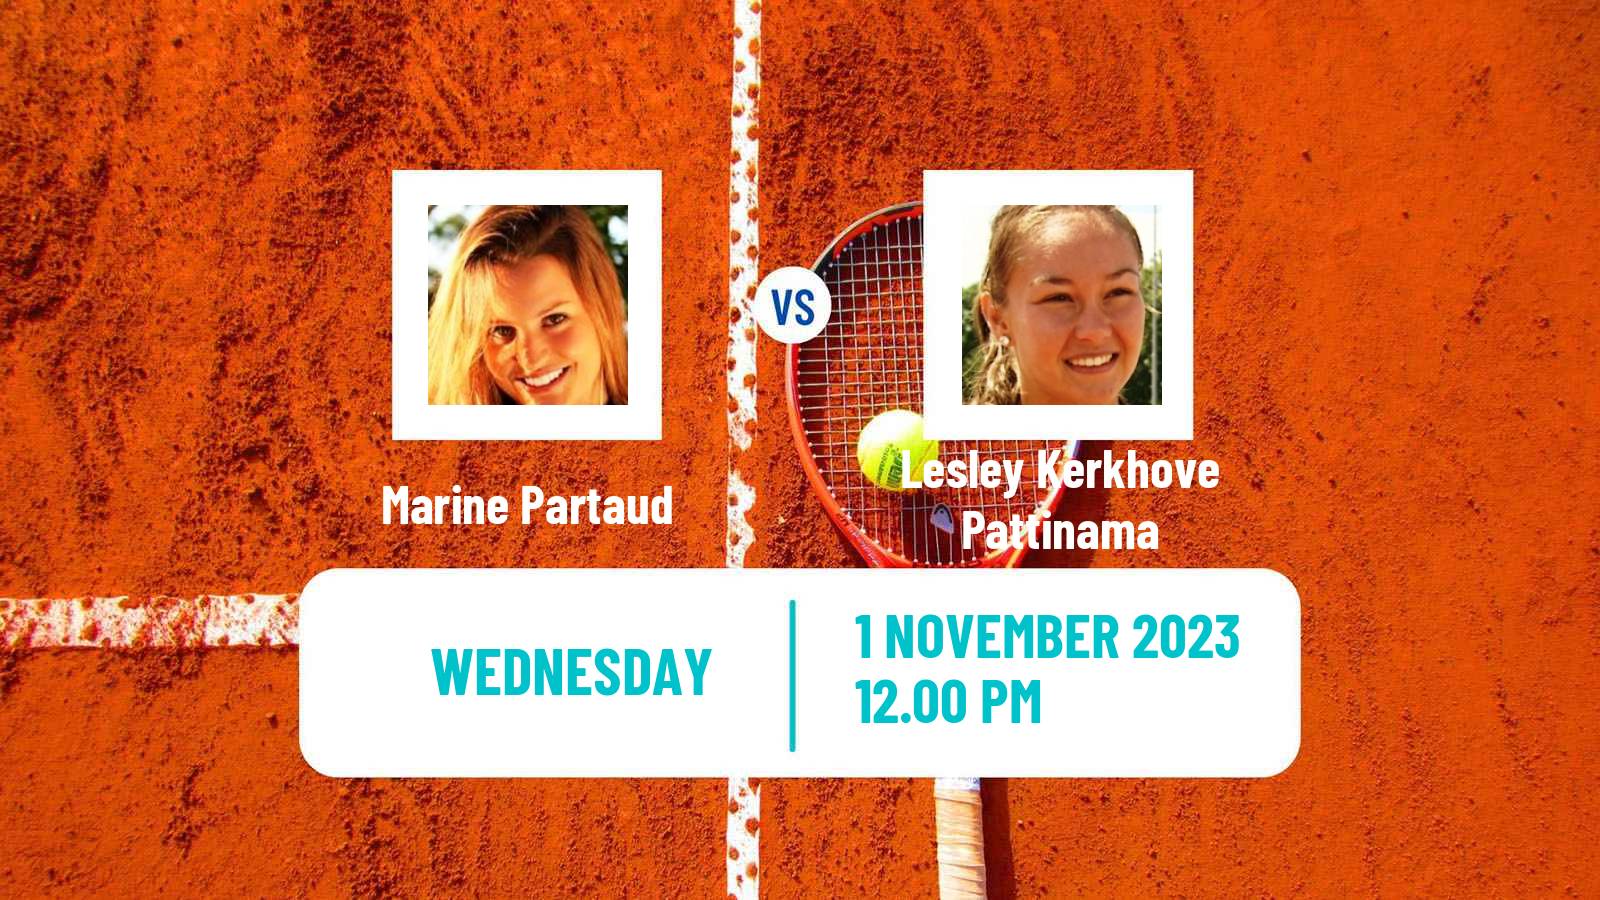 Tennis ITF W25 Edmonton Women Marine Partaud - Lesley Kerkhove Pattinama